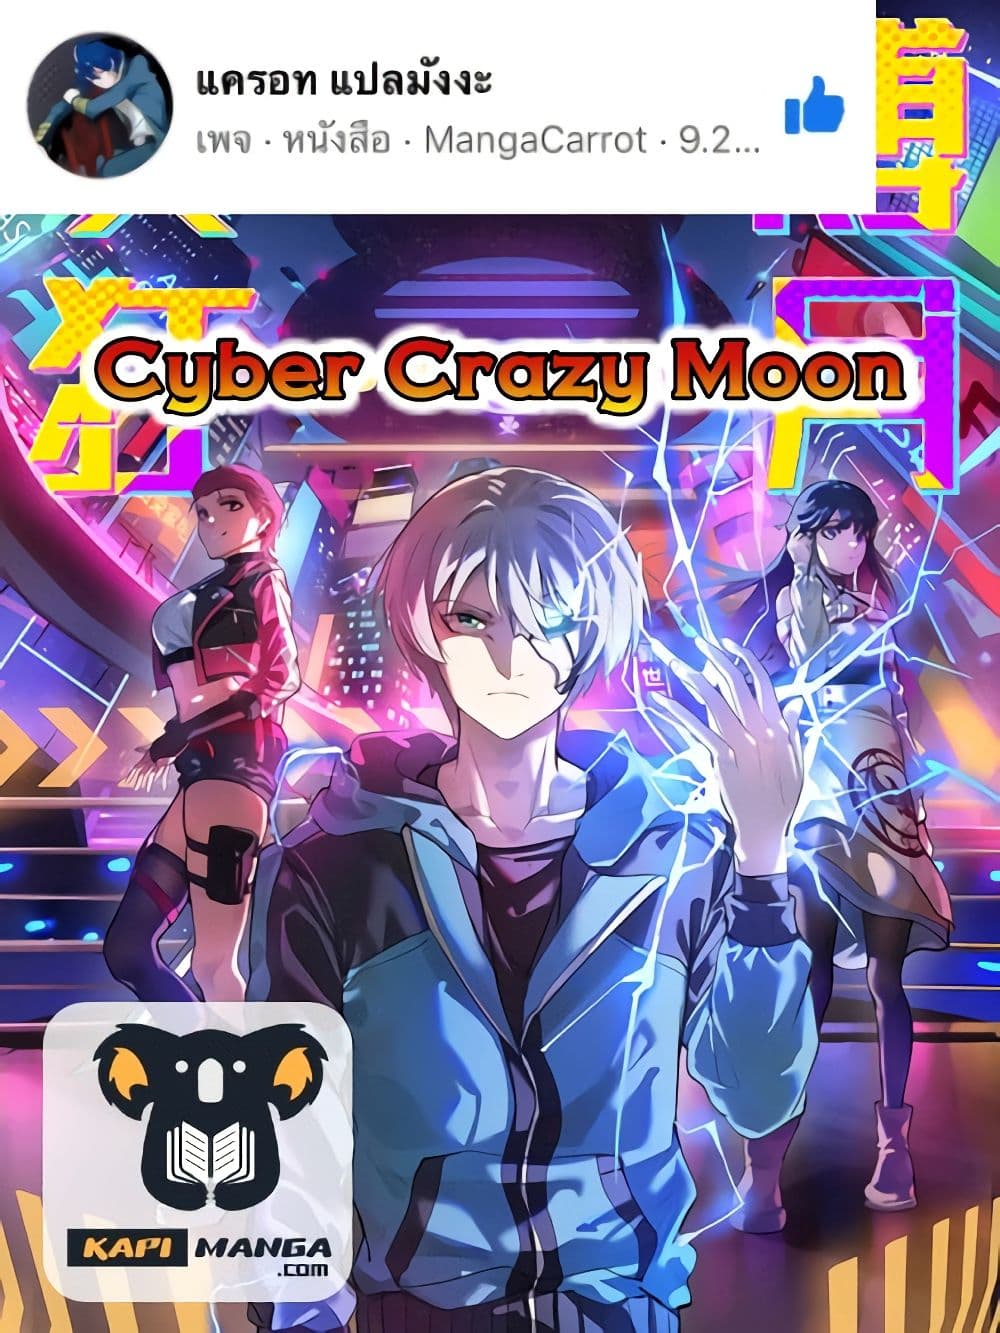 Cyber Crazy Moon 0 (1)